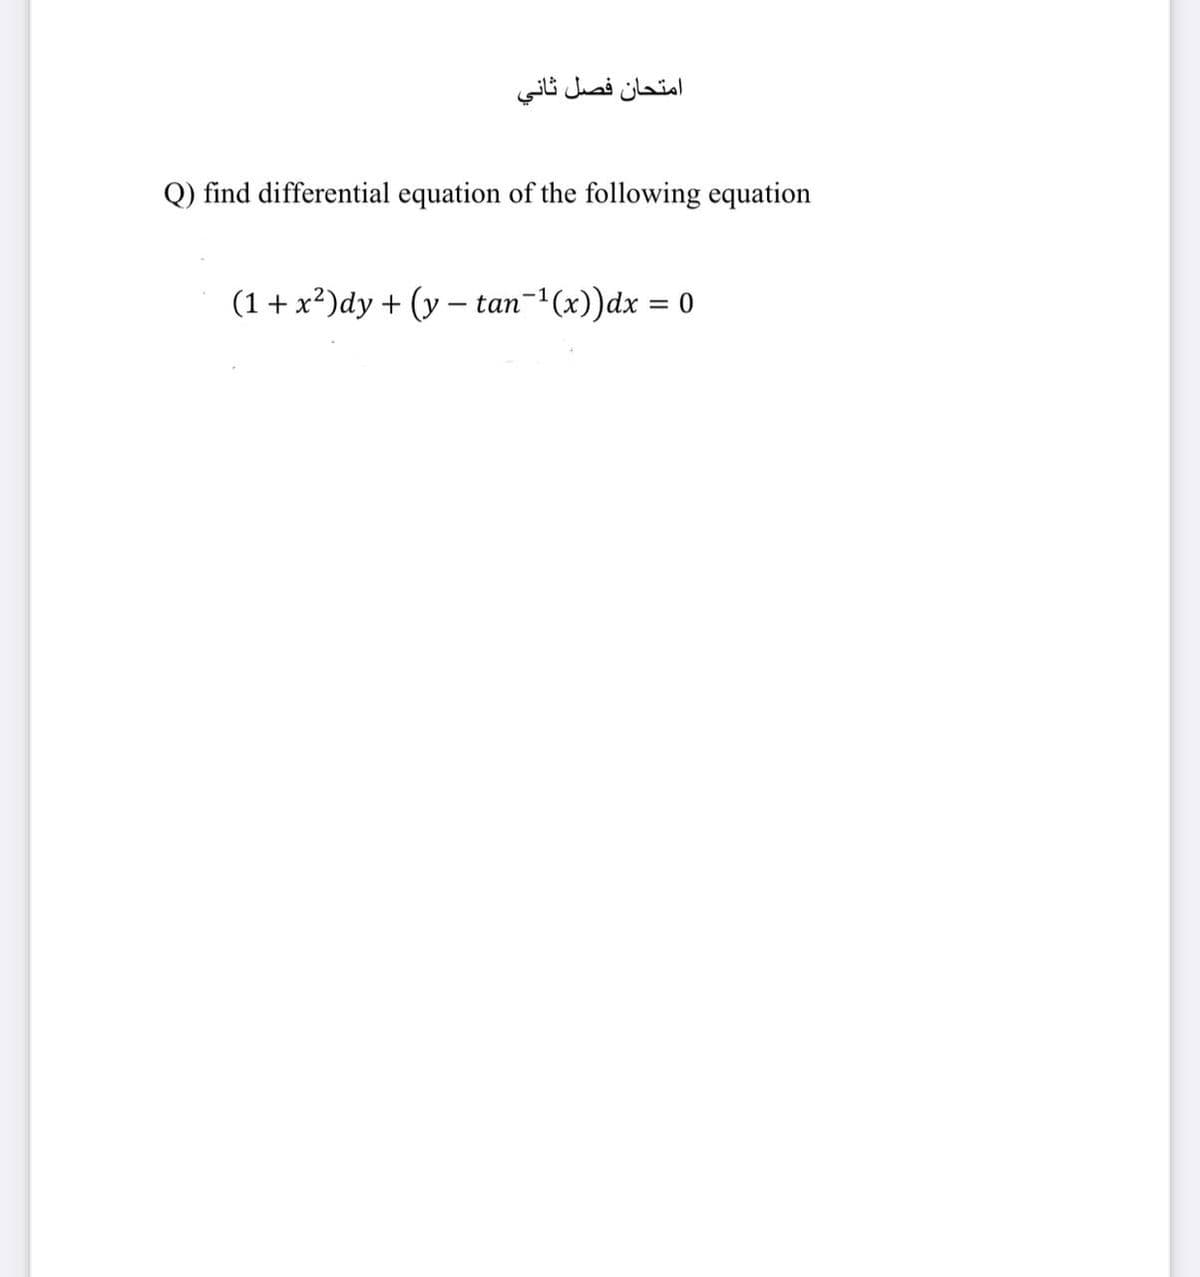 امتحان فصل ثاني
Q) find differential equation of the following equation
(1 + x2)dy + (y - tan-1(x))dx = 0